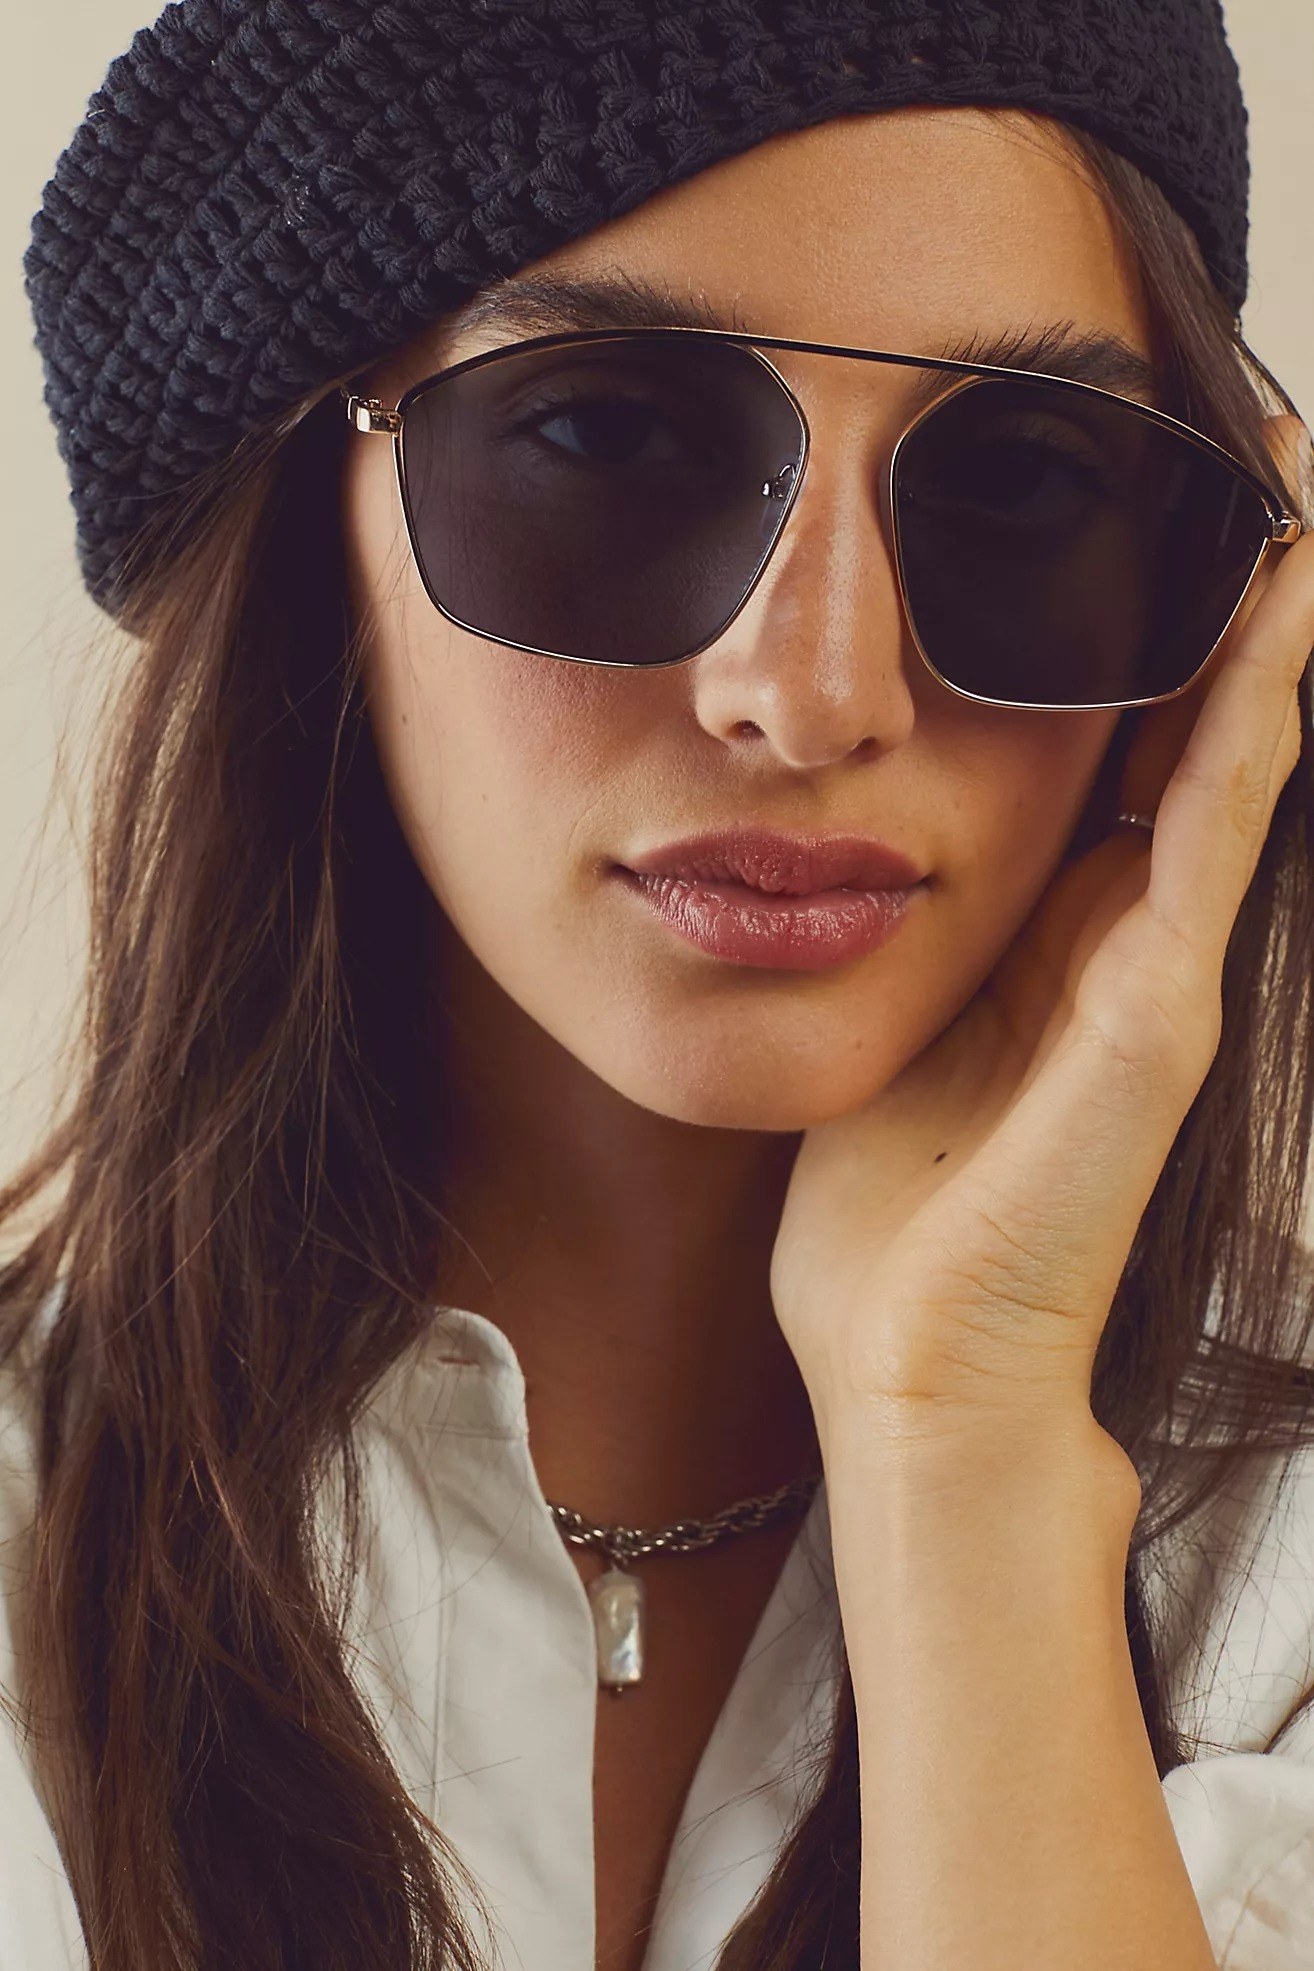 model wearing the sunglasses